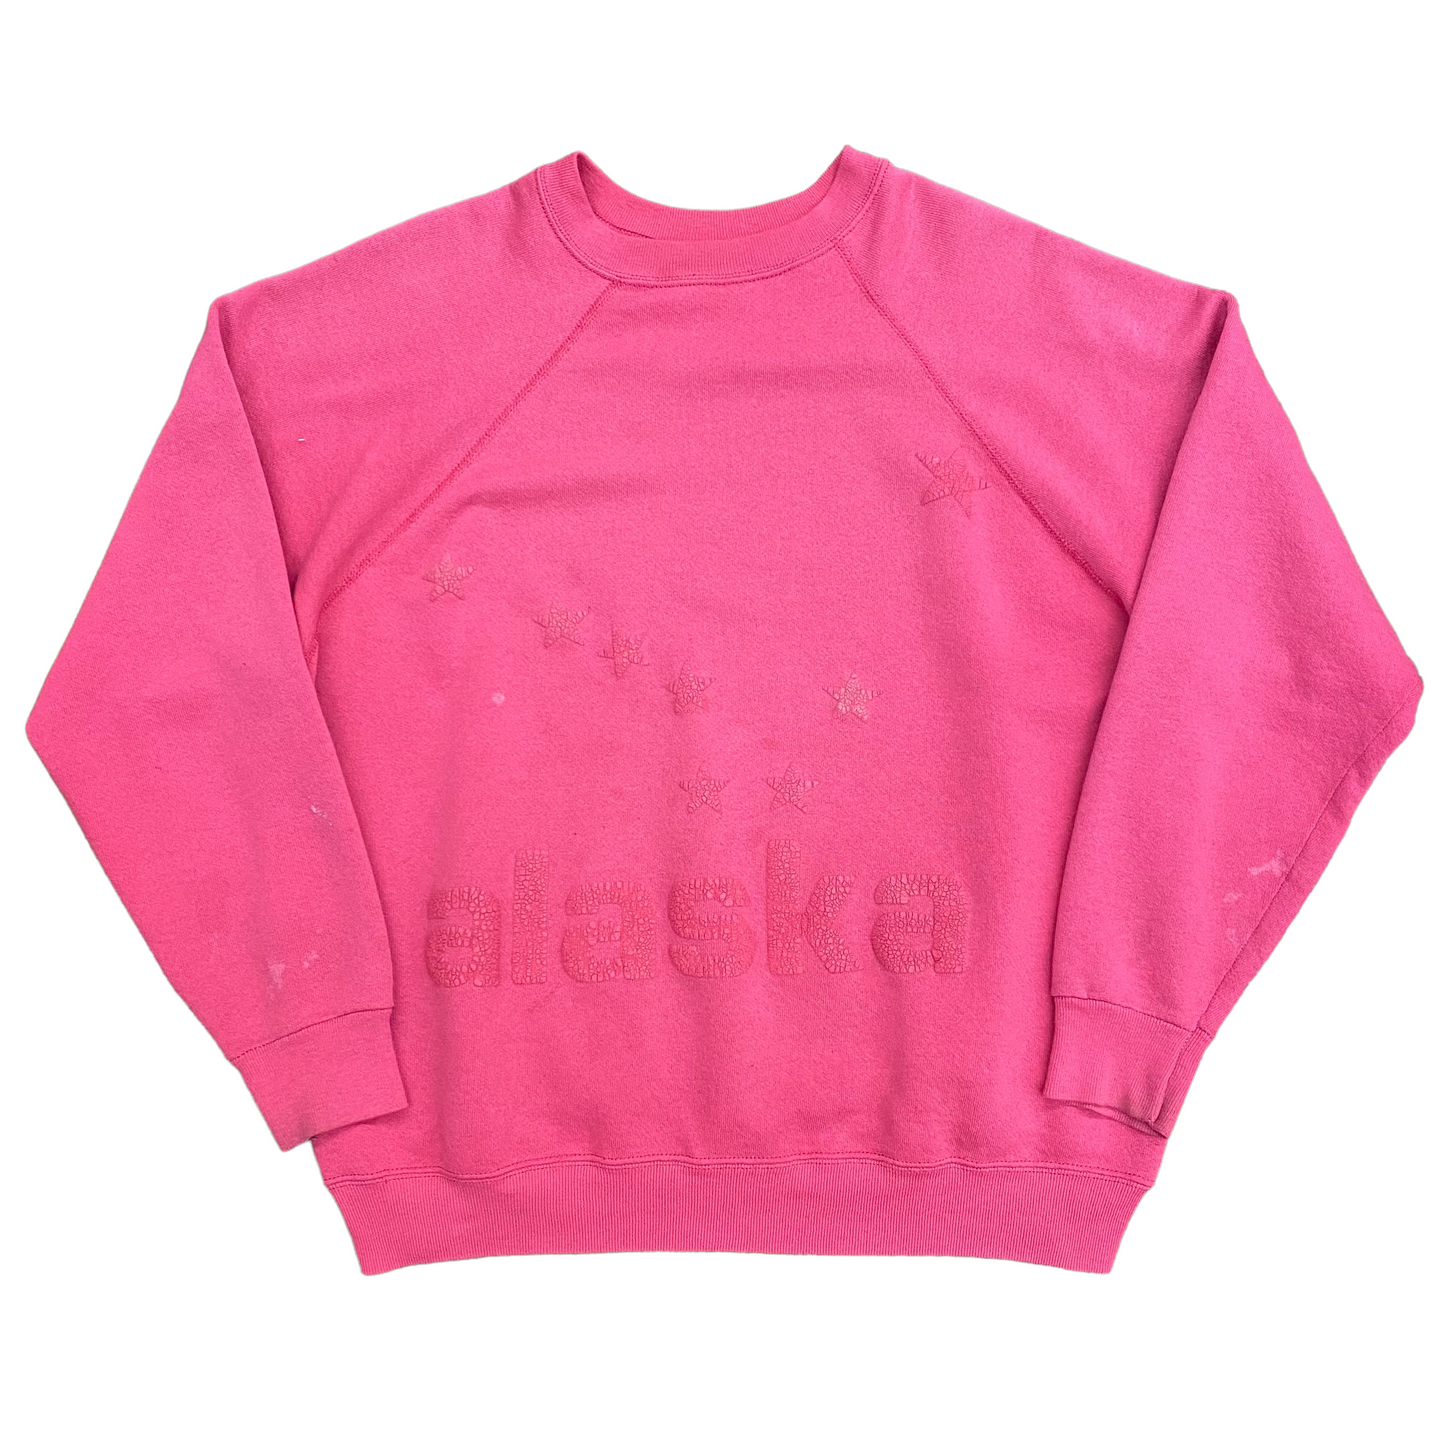 Vintage 80s “Alaska” Pink Puff Print Crewneck Sweatshirt - Size Medium